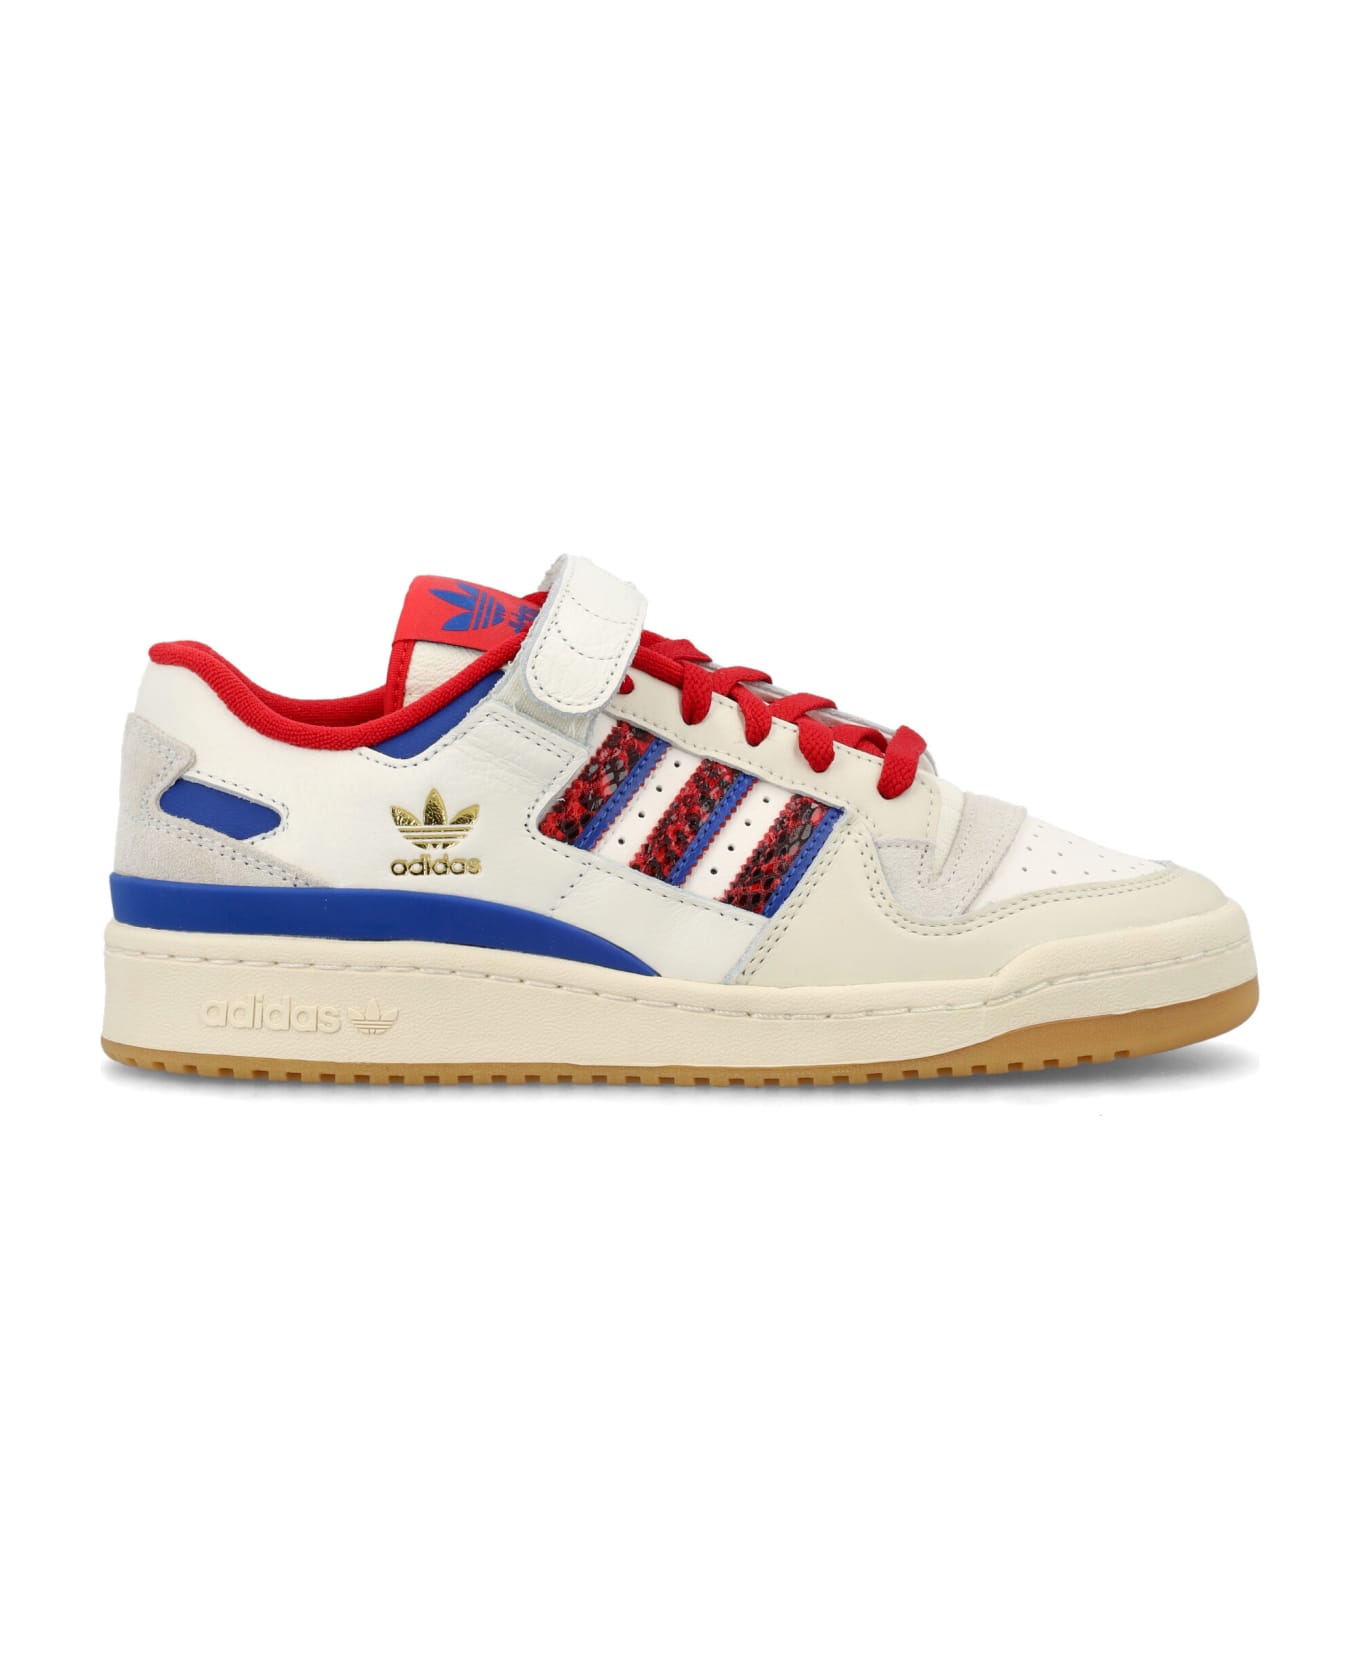 Adidas Originals Forum 84 Low Shoes - WHITE RED スニーカー